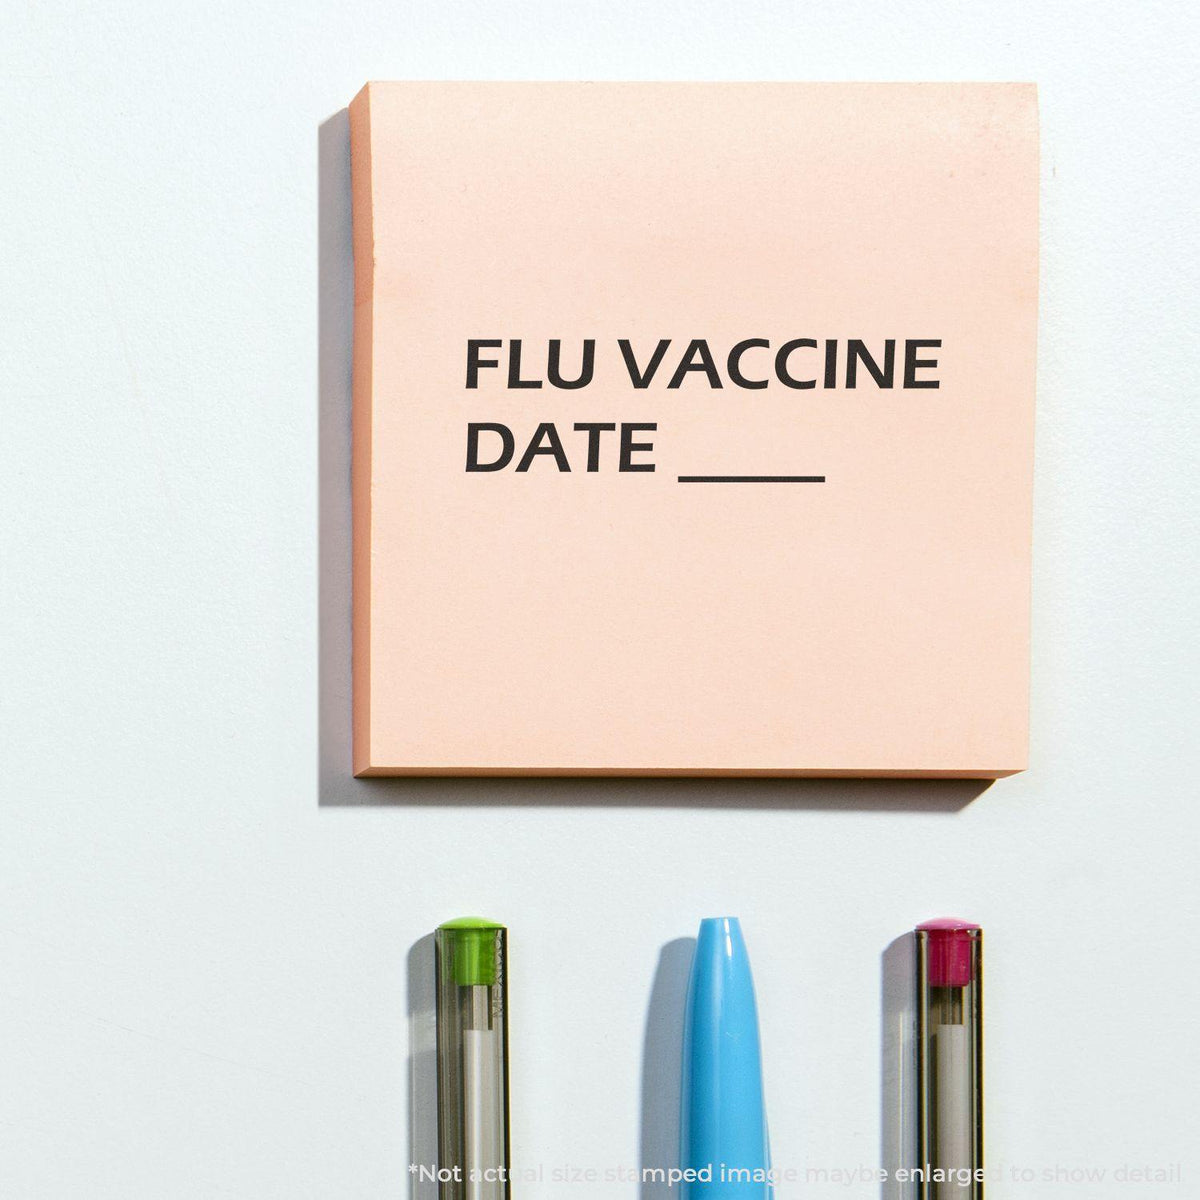 In Use Slim Pre Inked Flu Vaccine Date Stamp Image